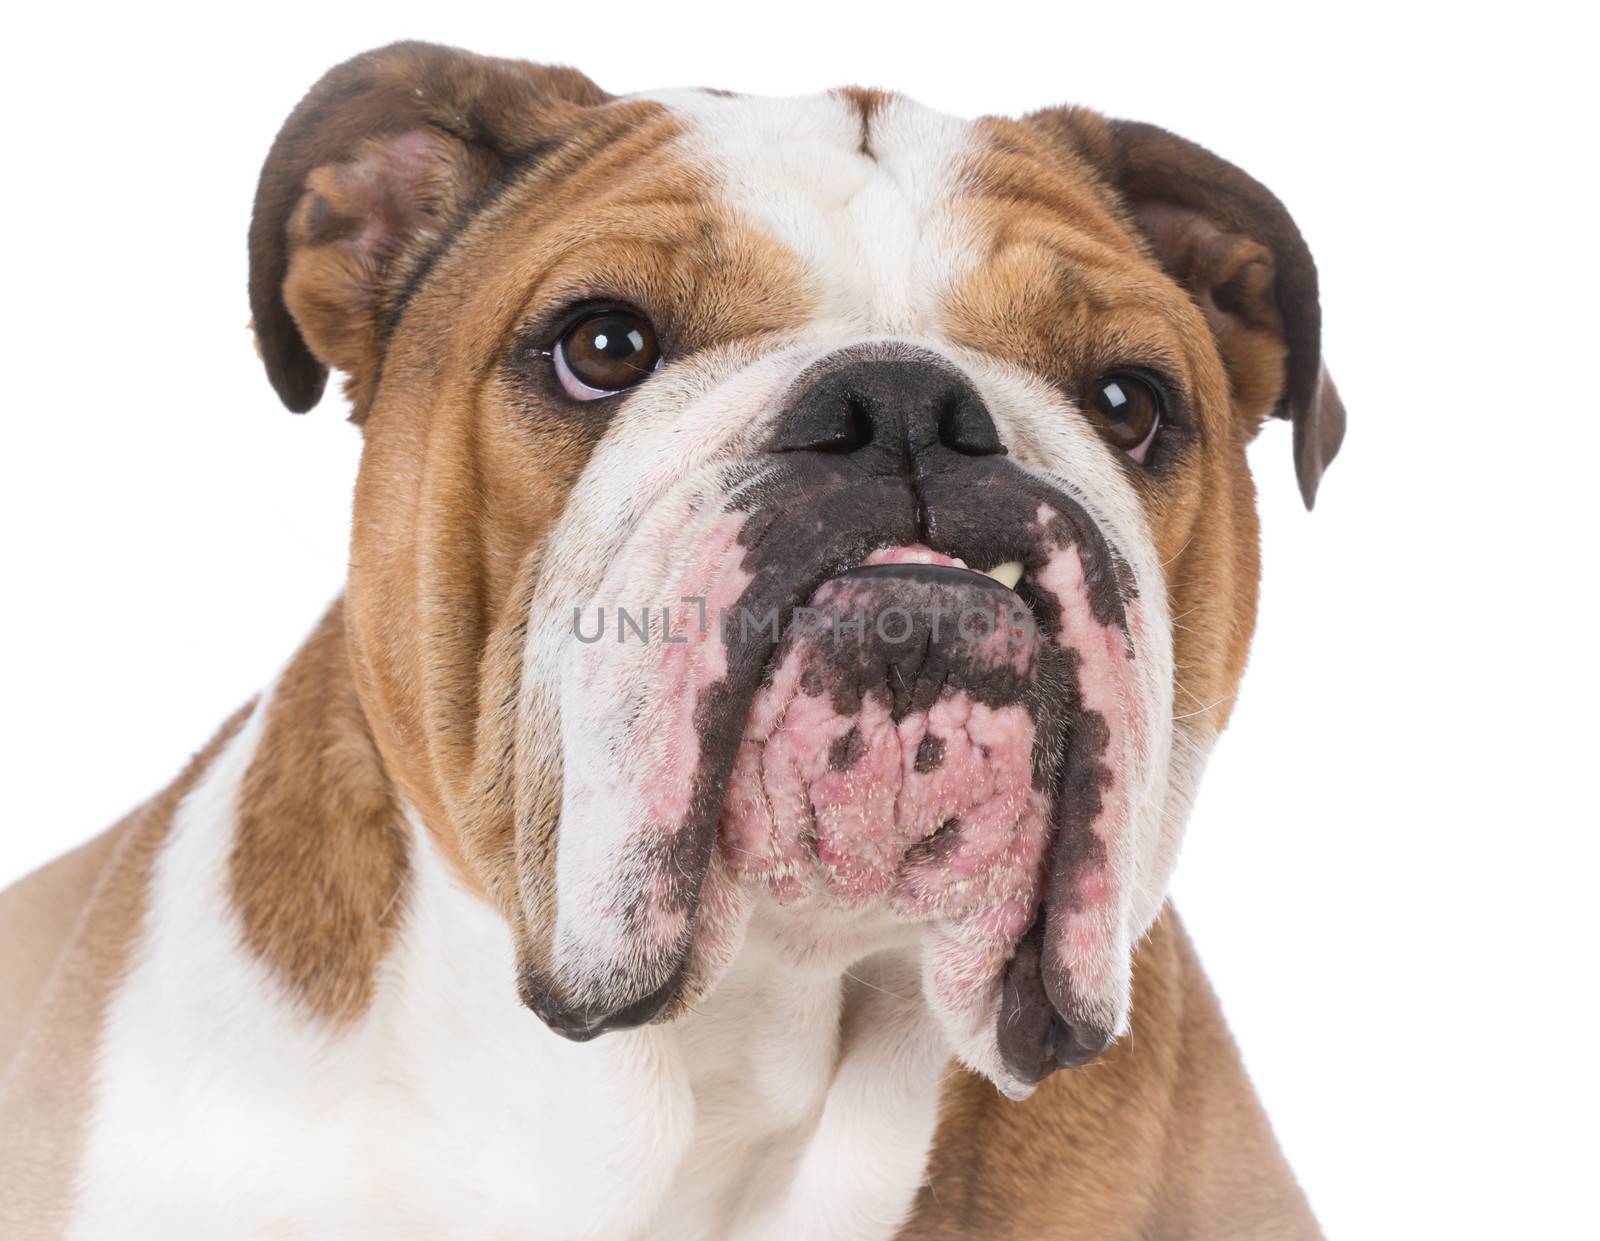 english bulldog portrait on white background